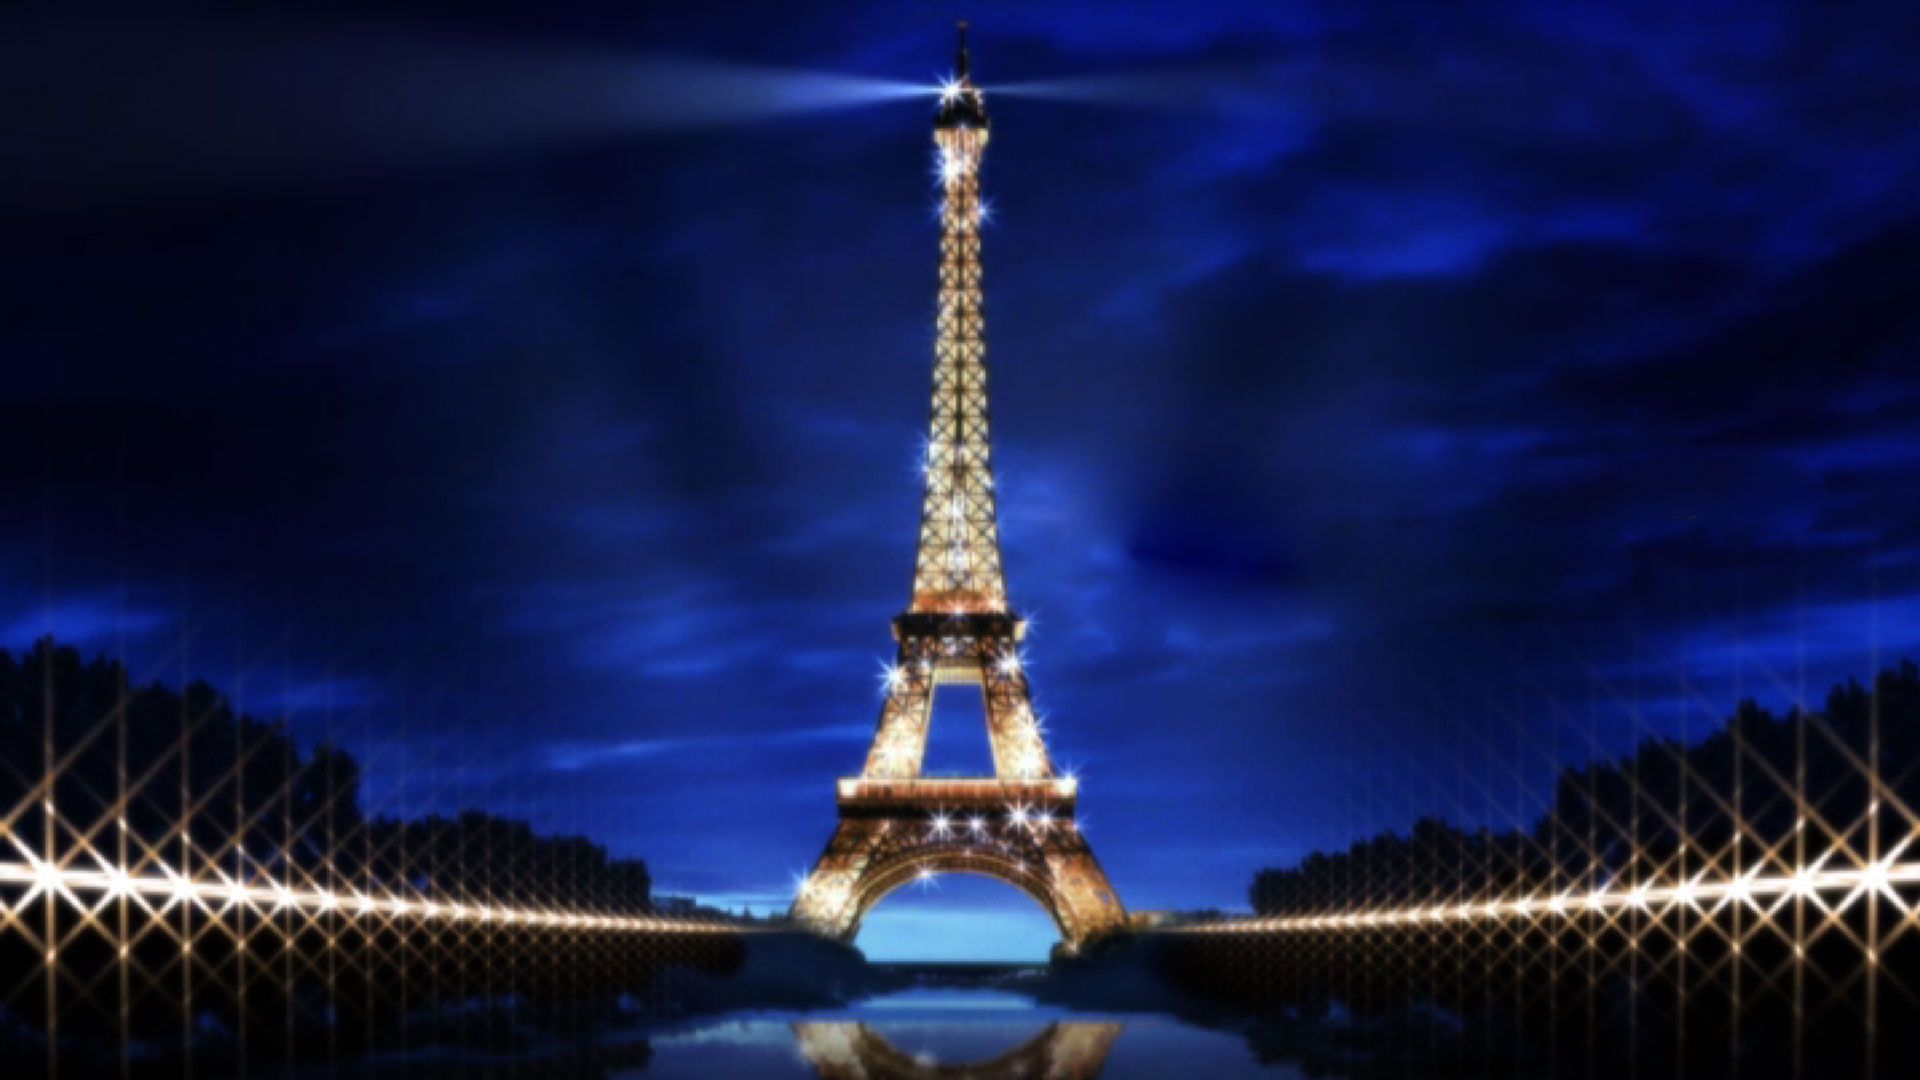 Eiffel Tower in Paris on lockdown over suspected terror attack